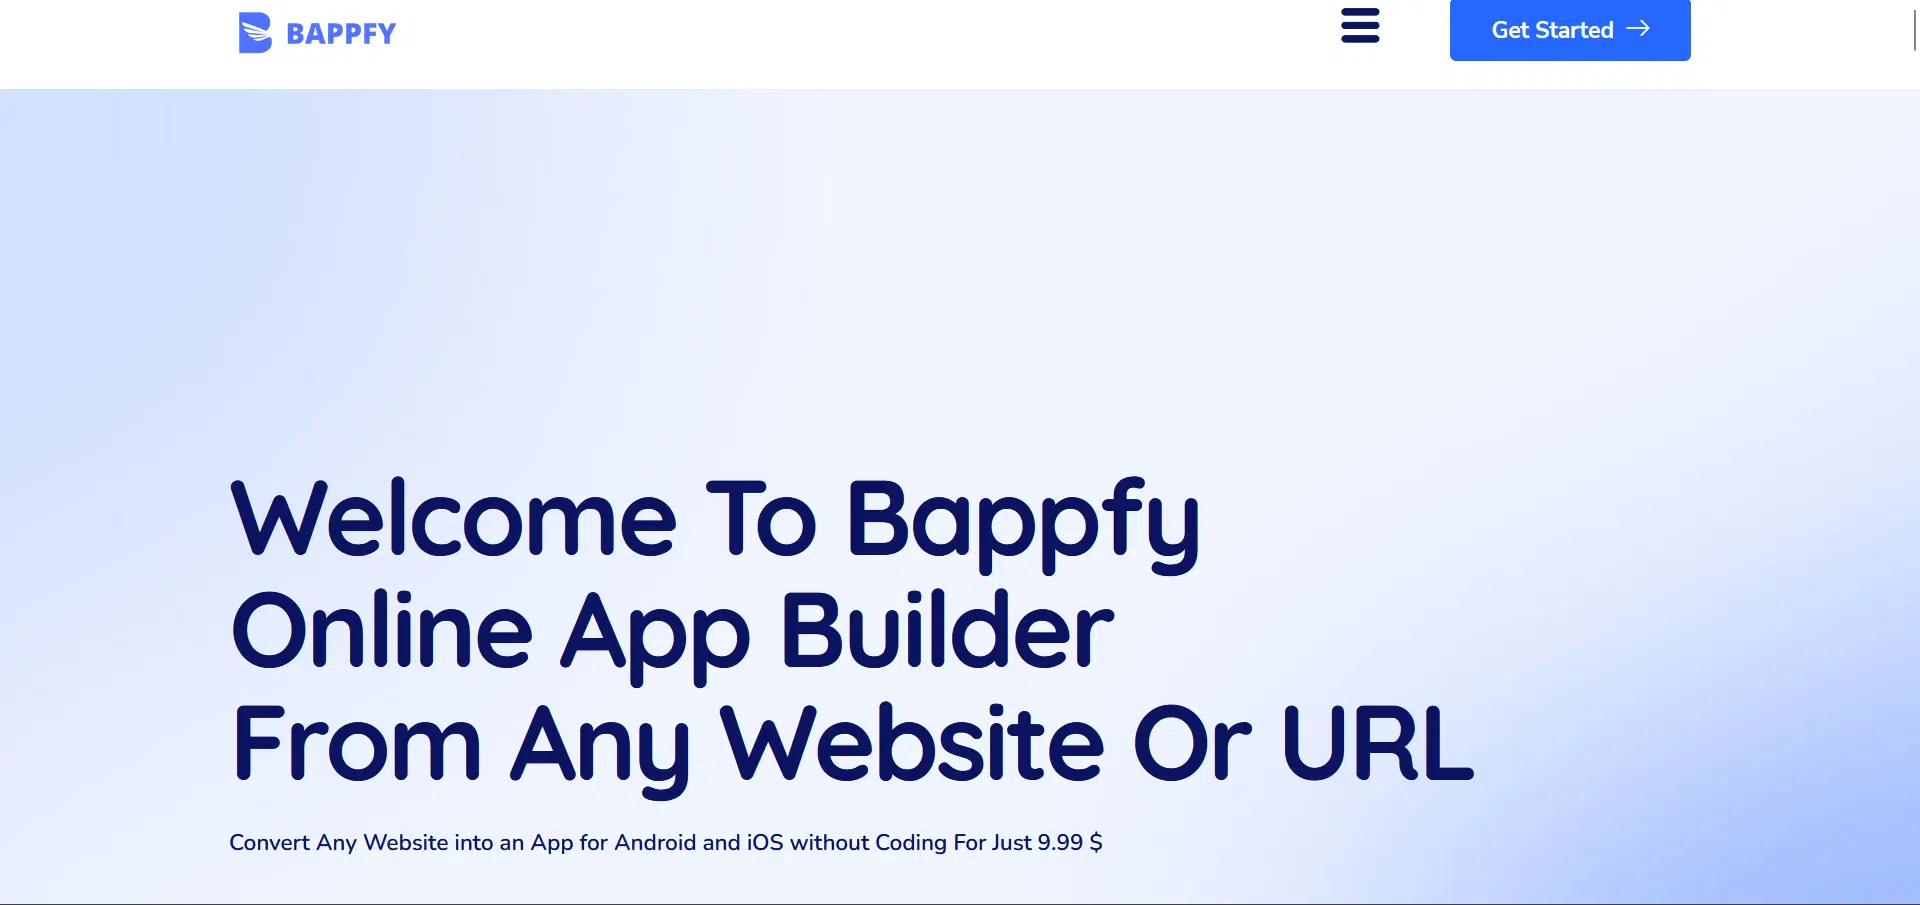 Bappfywebsite picture